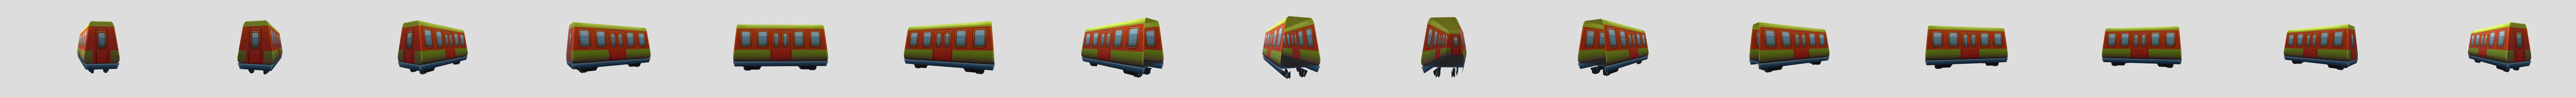 Subwaysurfers 3D models - Sketchfab